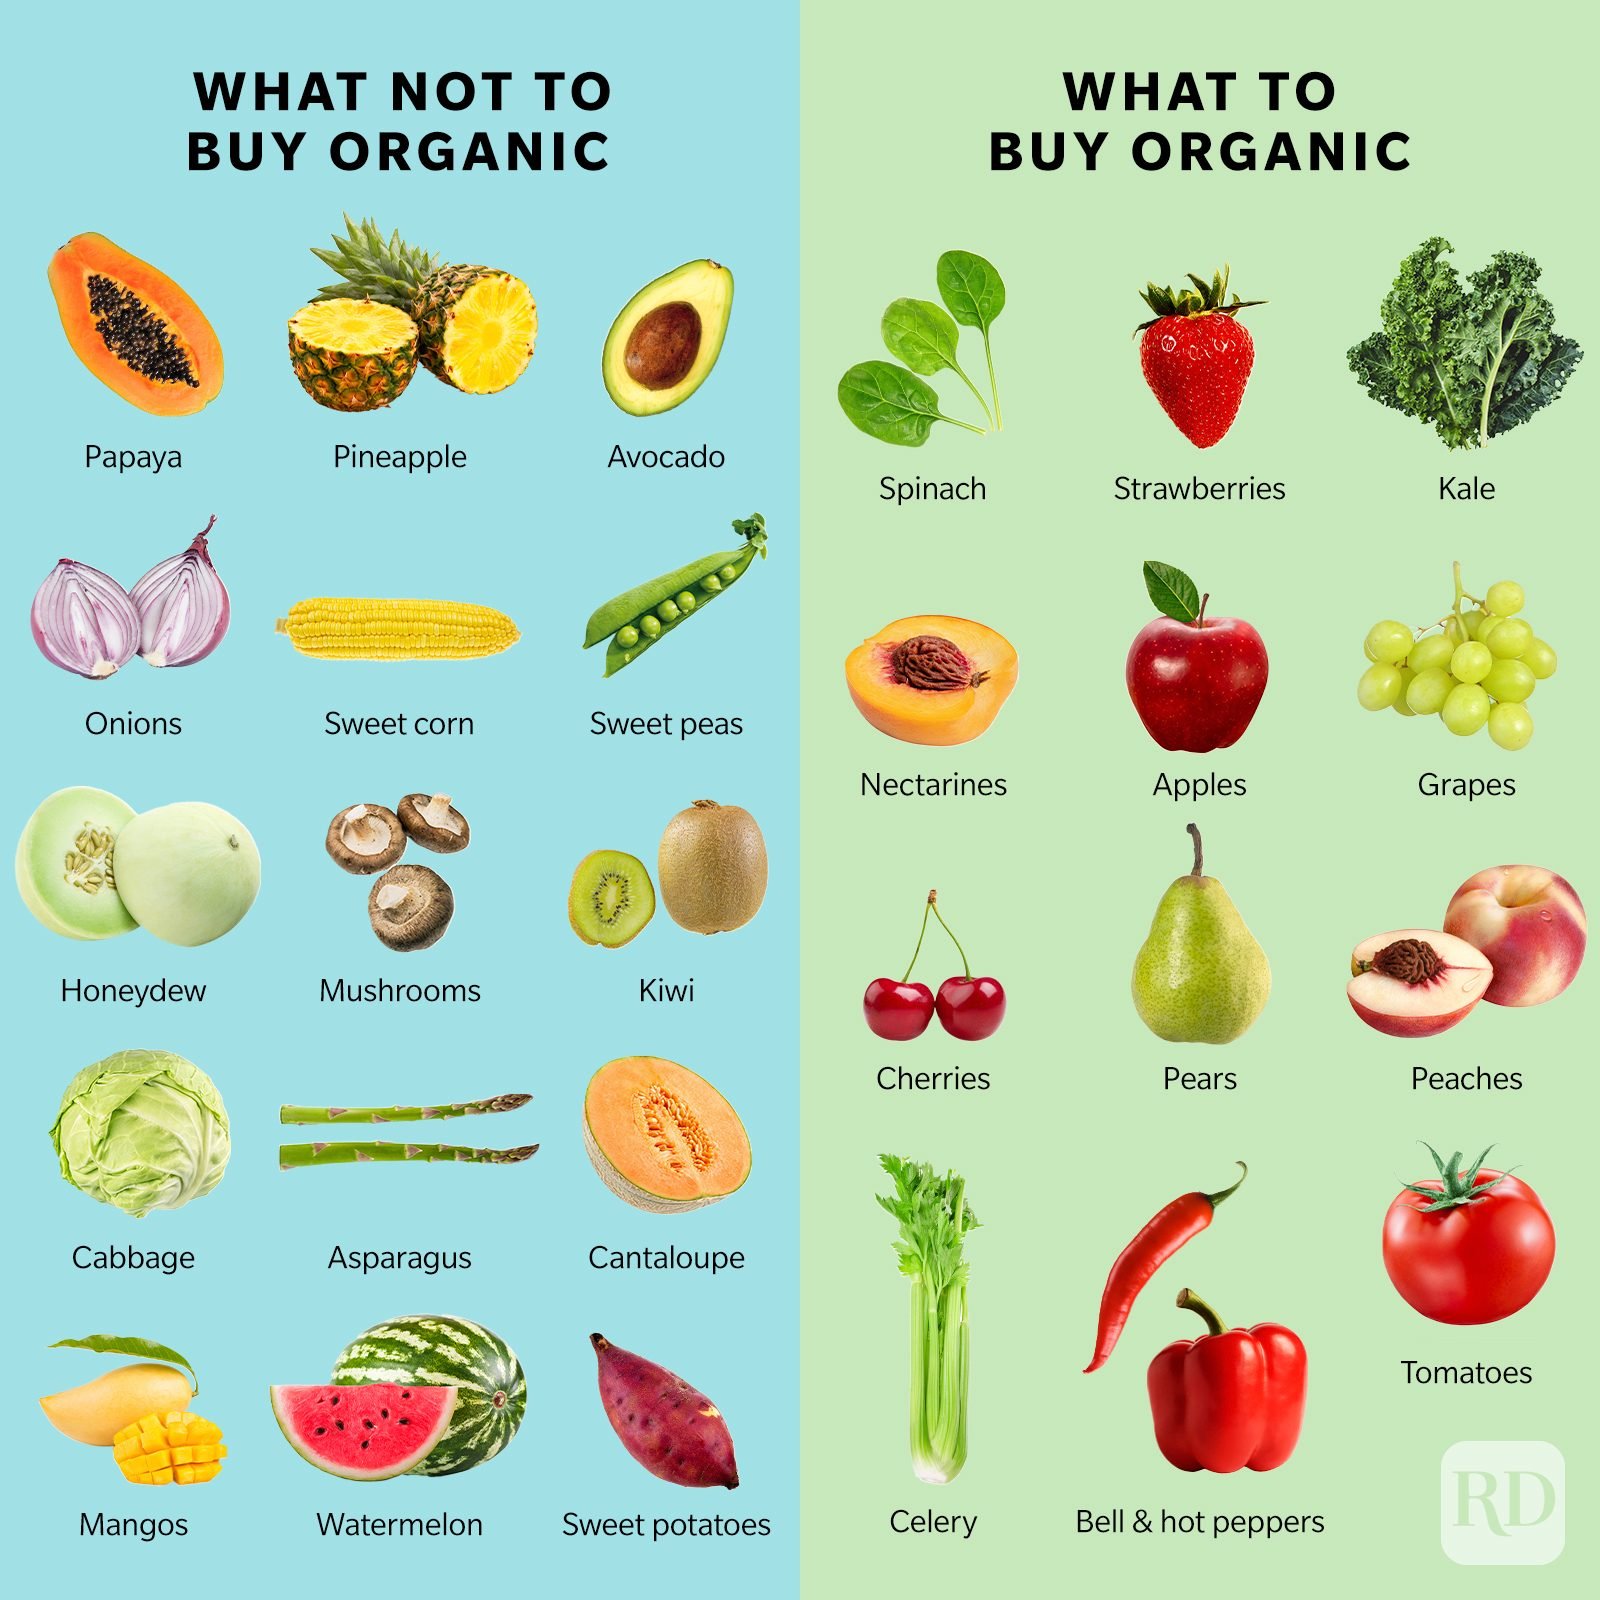 Organic food options